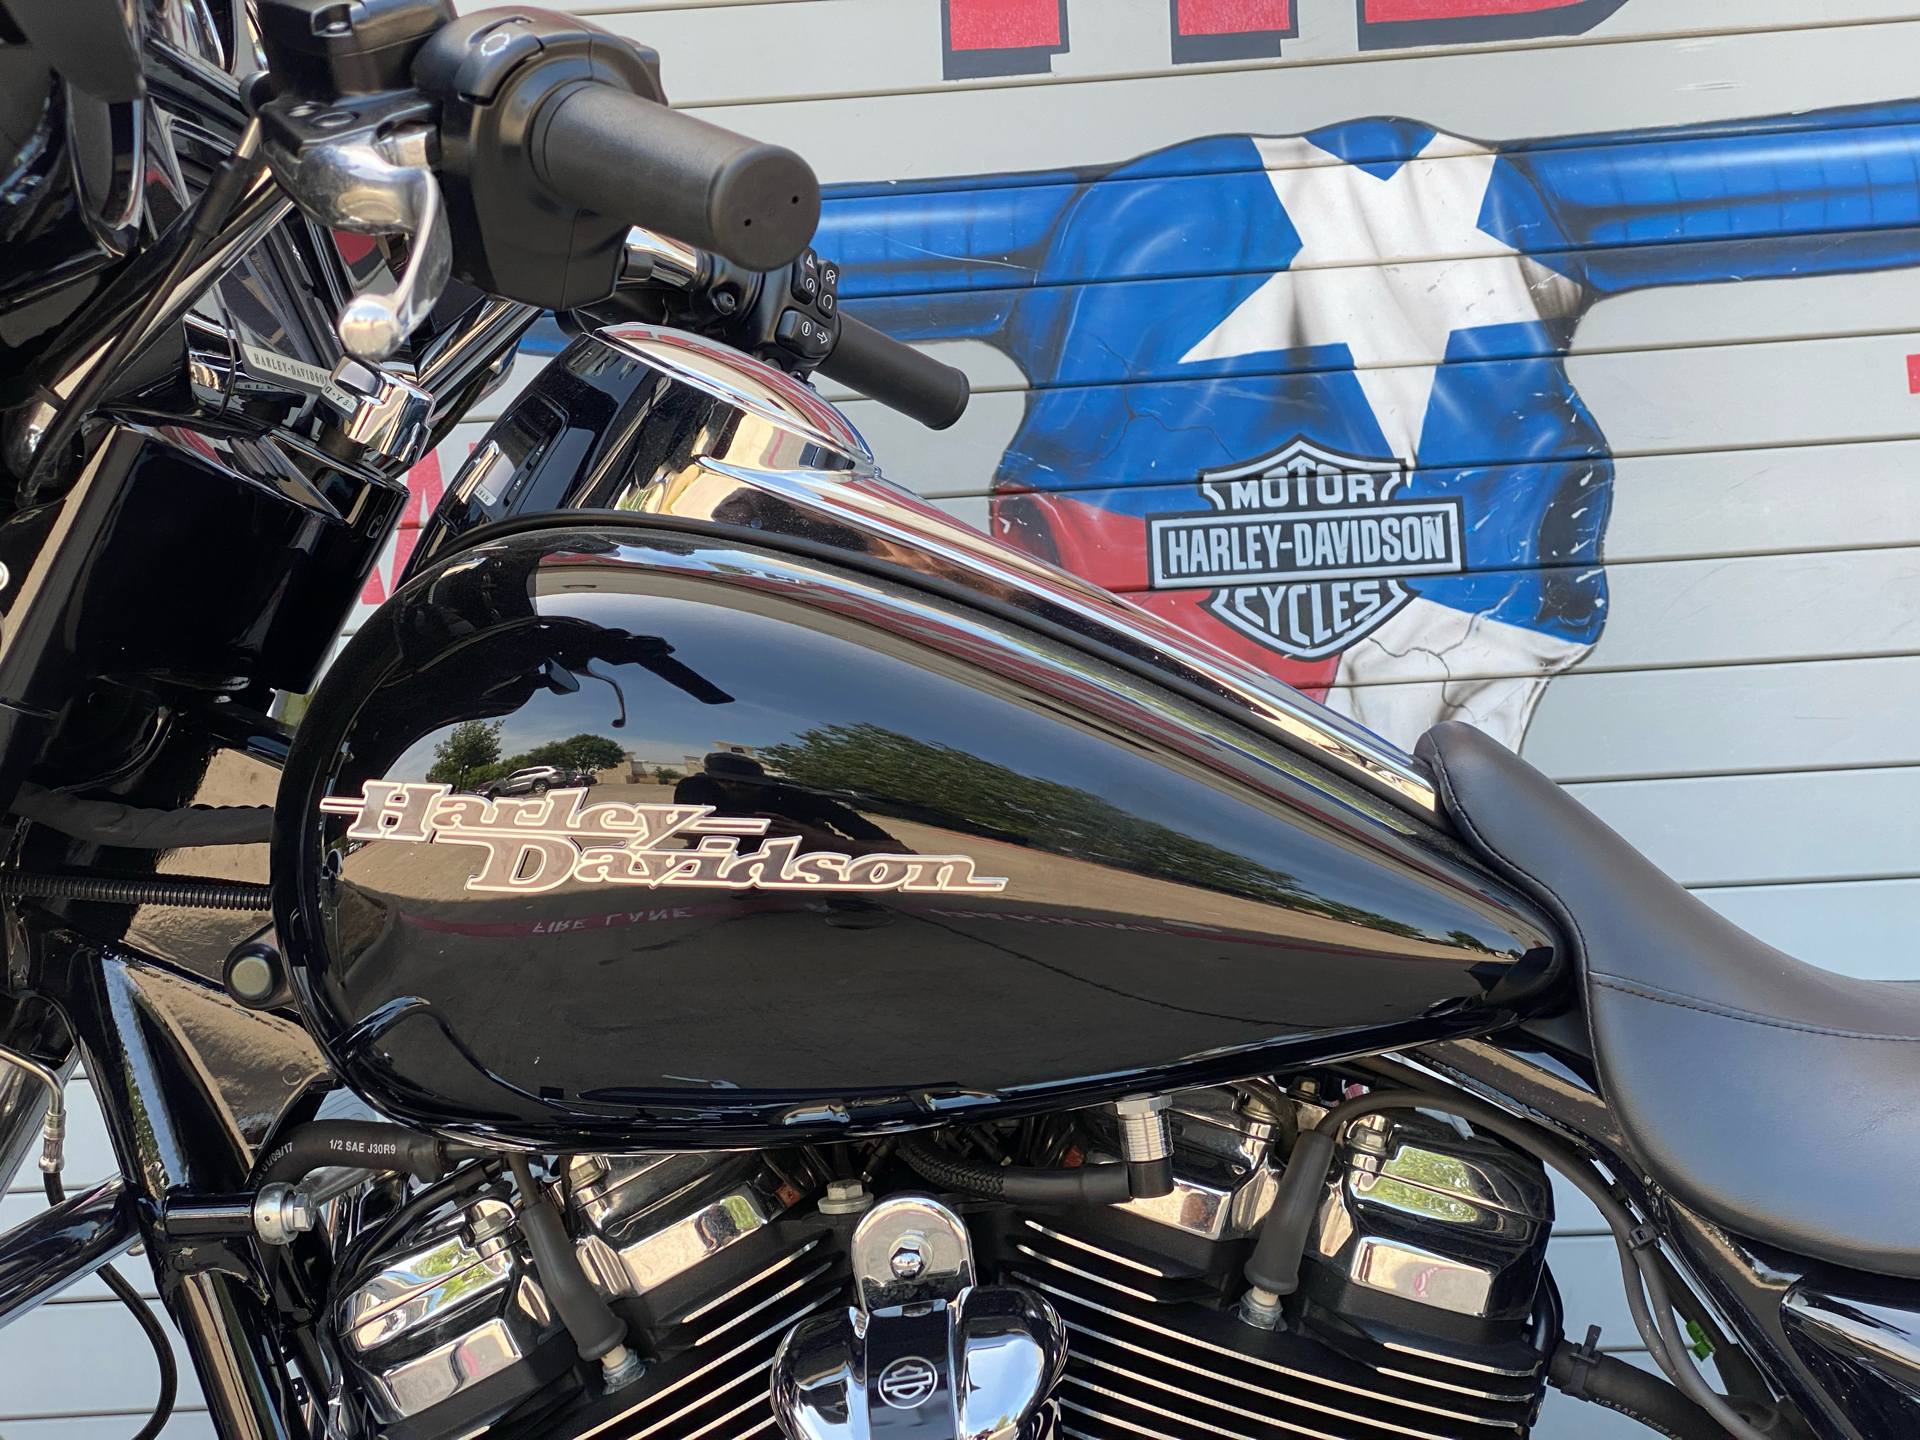 2017 Harley-Davidson Street Glide® Special in Grand Prairie, Texas - Photo 14